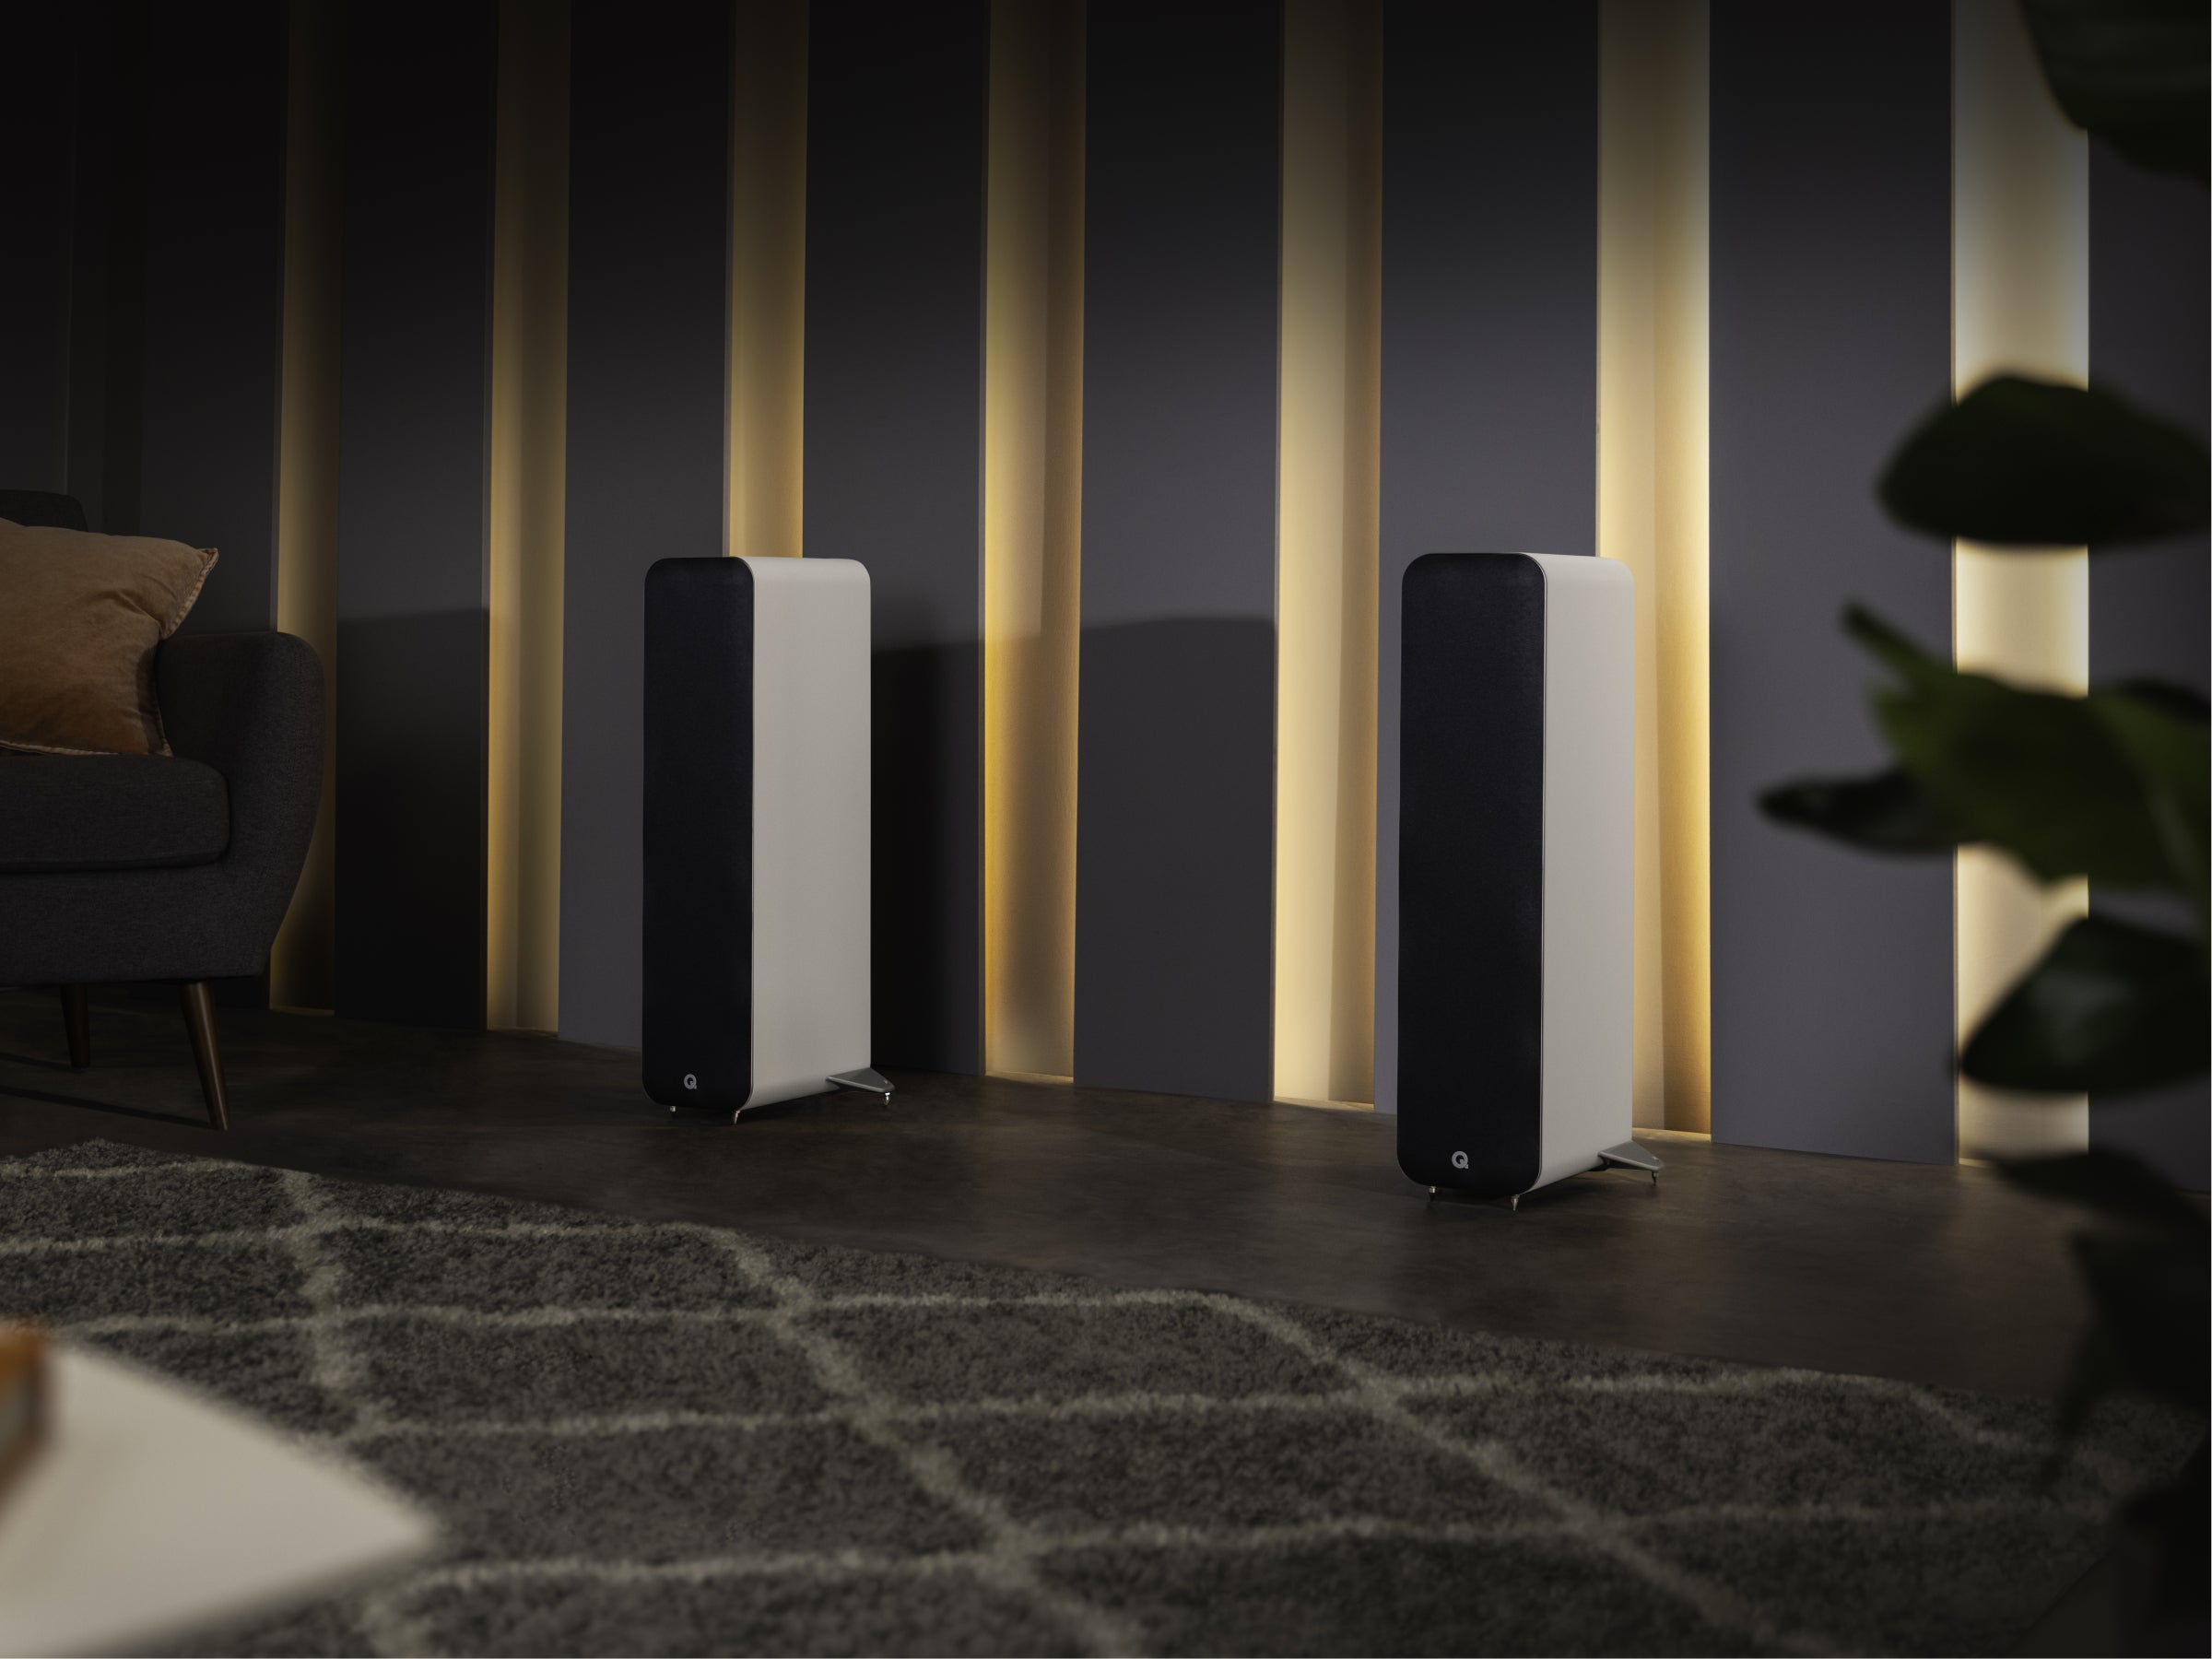 Q Acoustics M40 Wireless Speakers